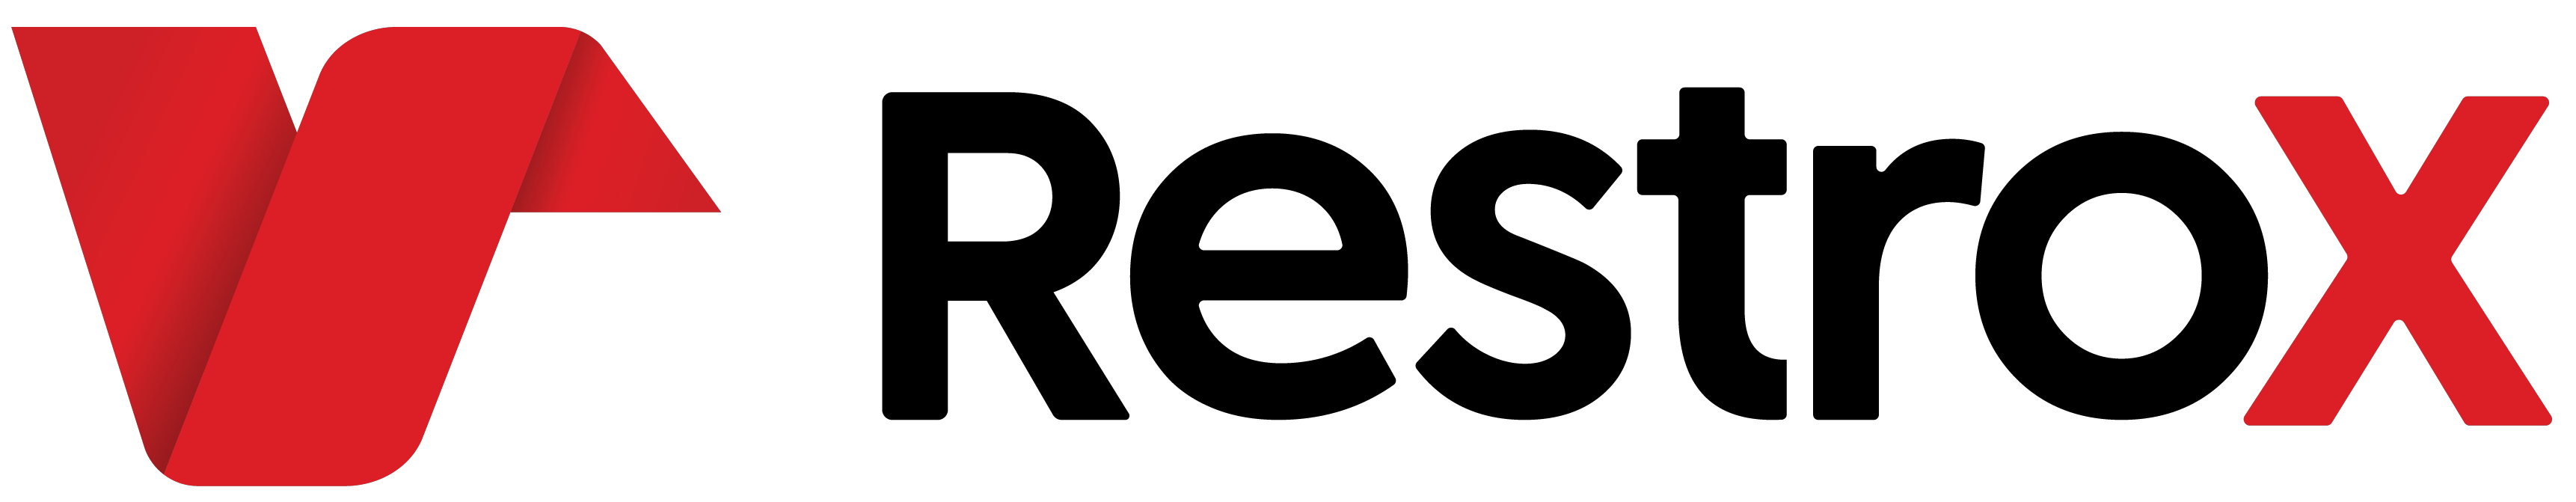 RestroX-logo-mobile-logo m